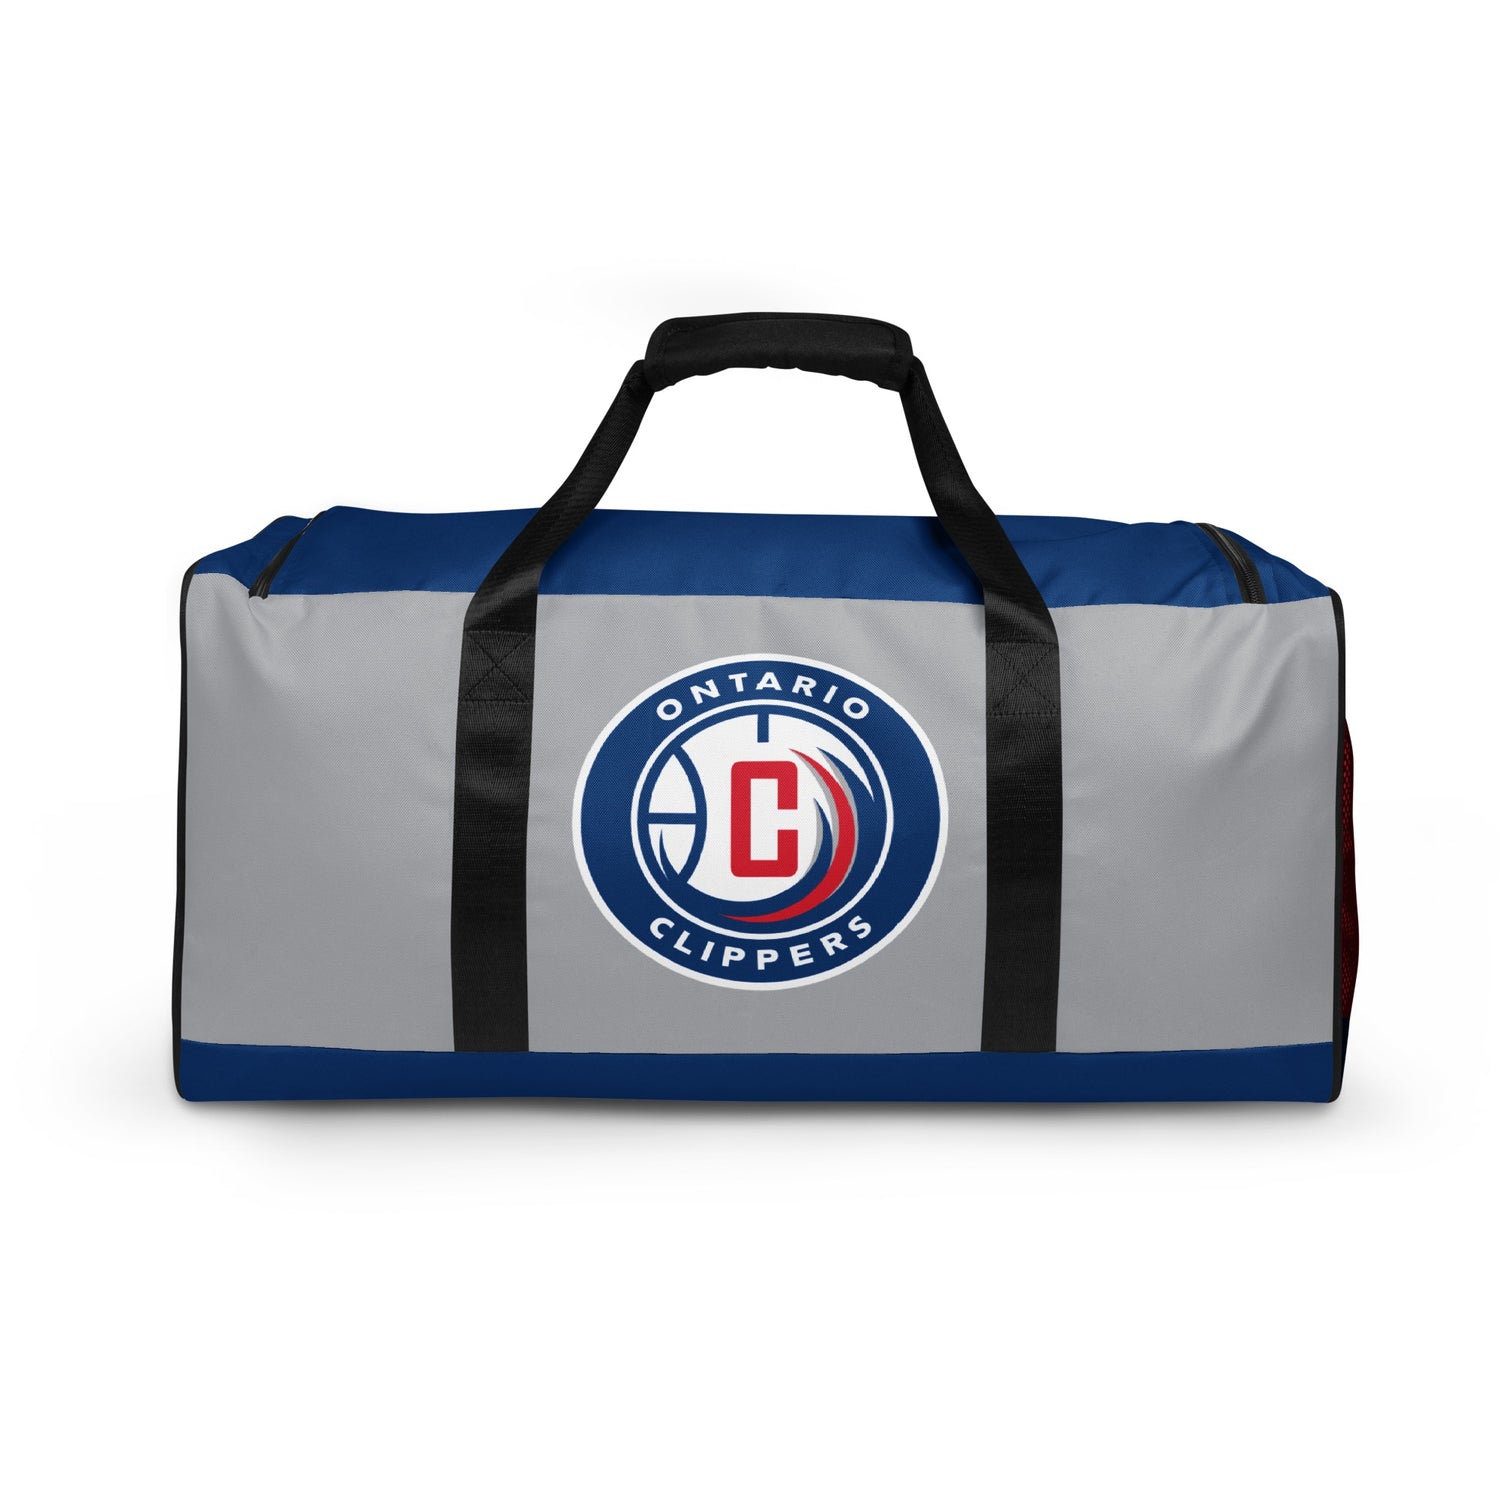 NBA G League Ontario Clippers Circle Duffle Bag